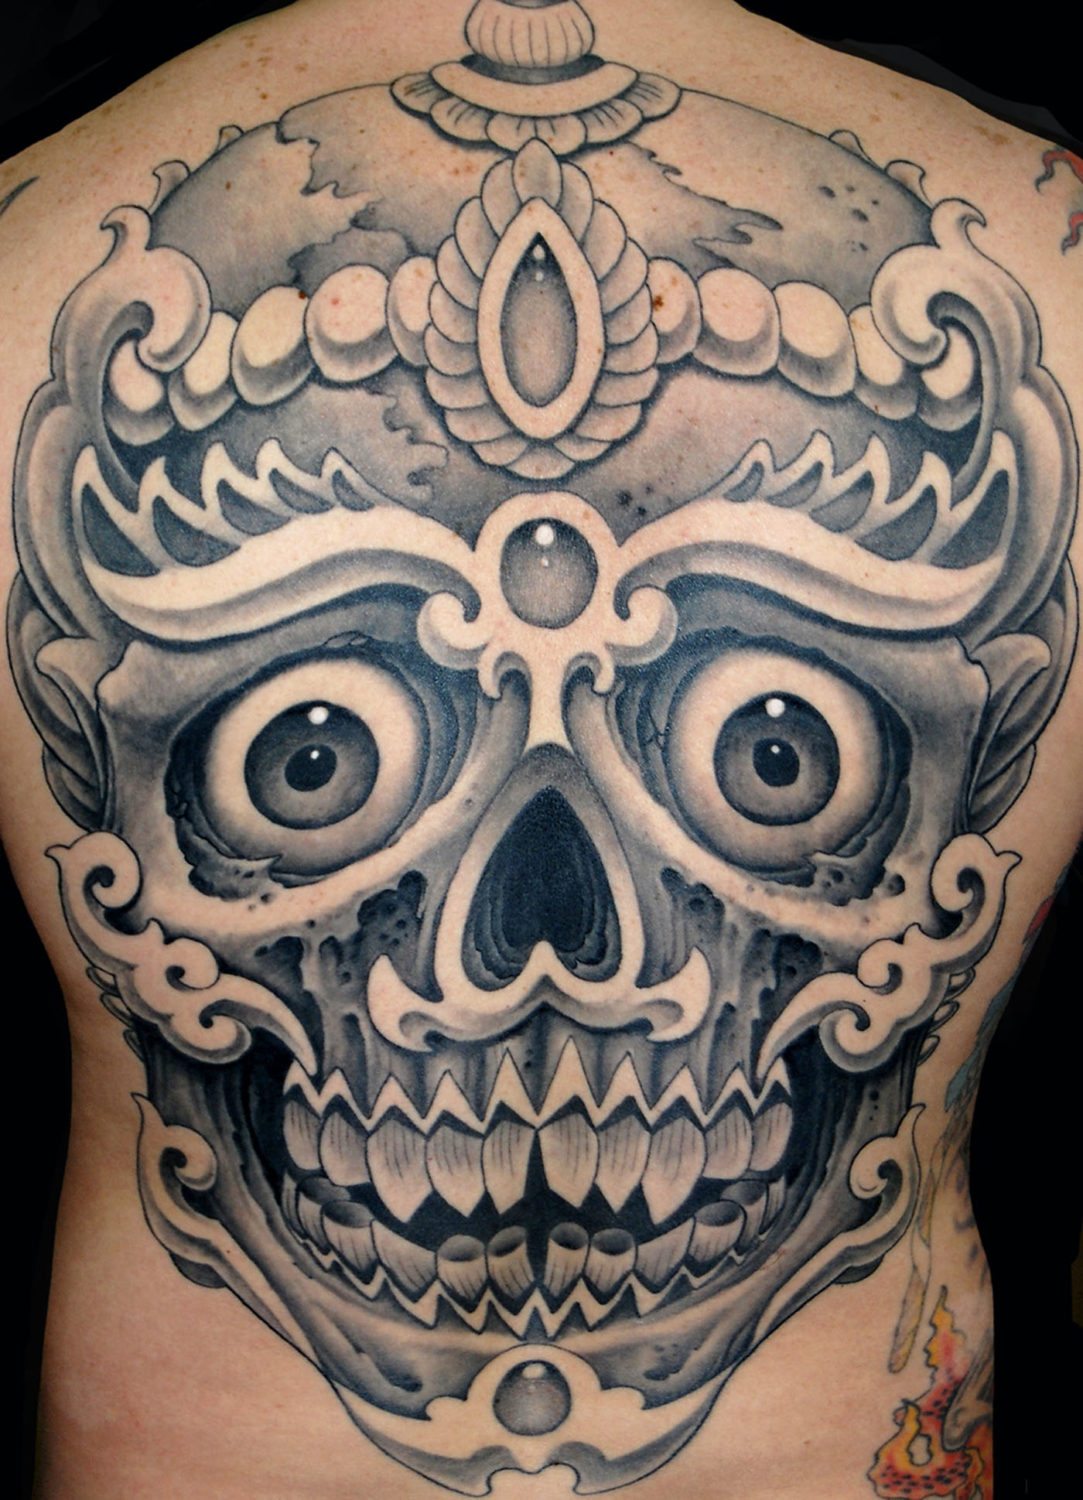 Religious/Spiritual Skull Tattoo